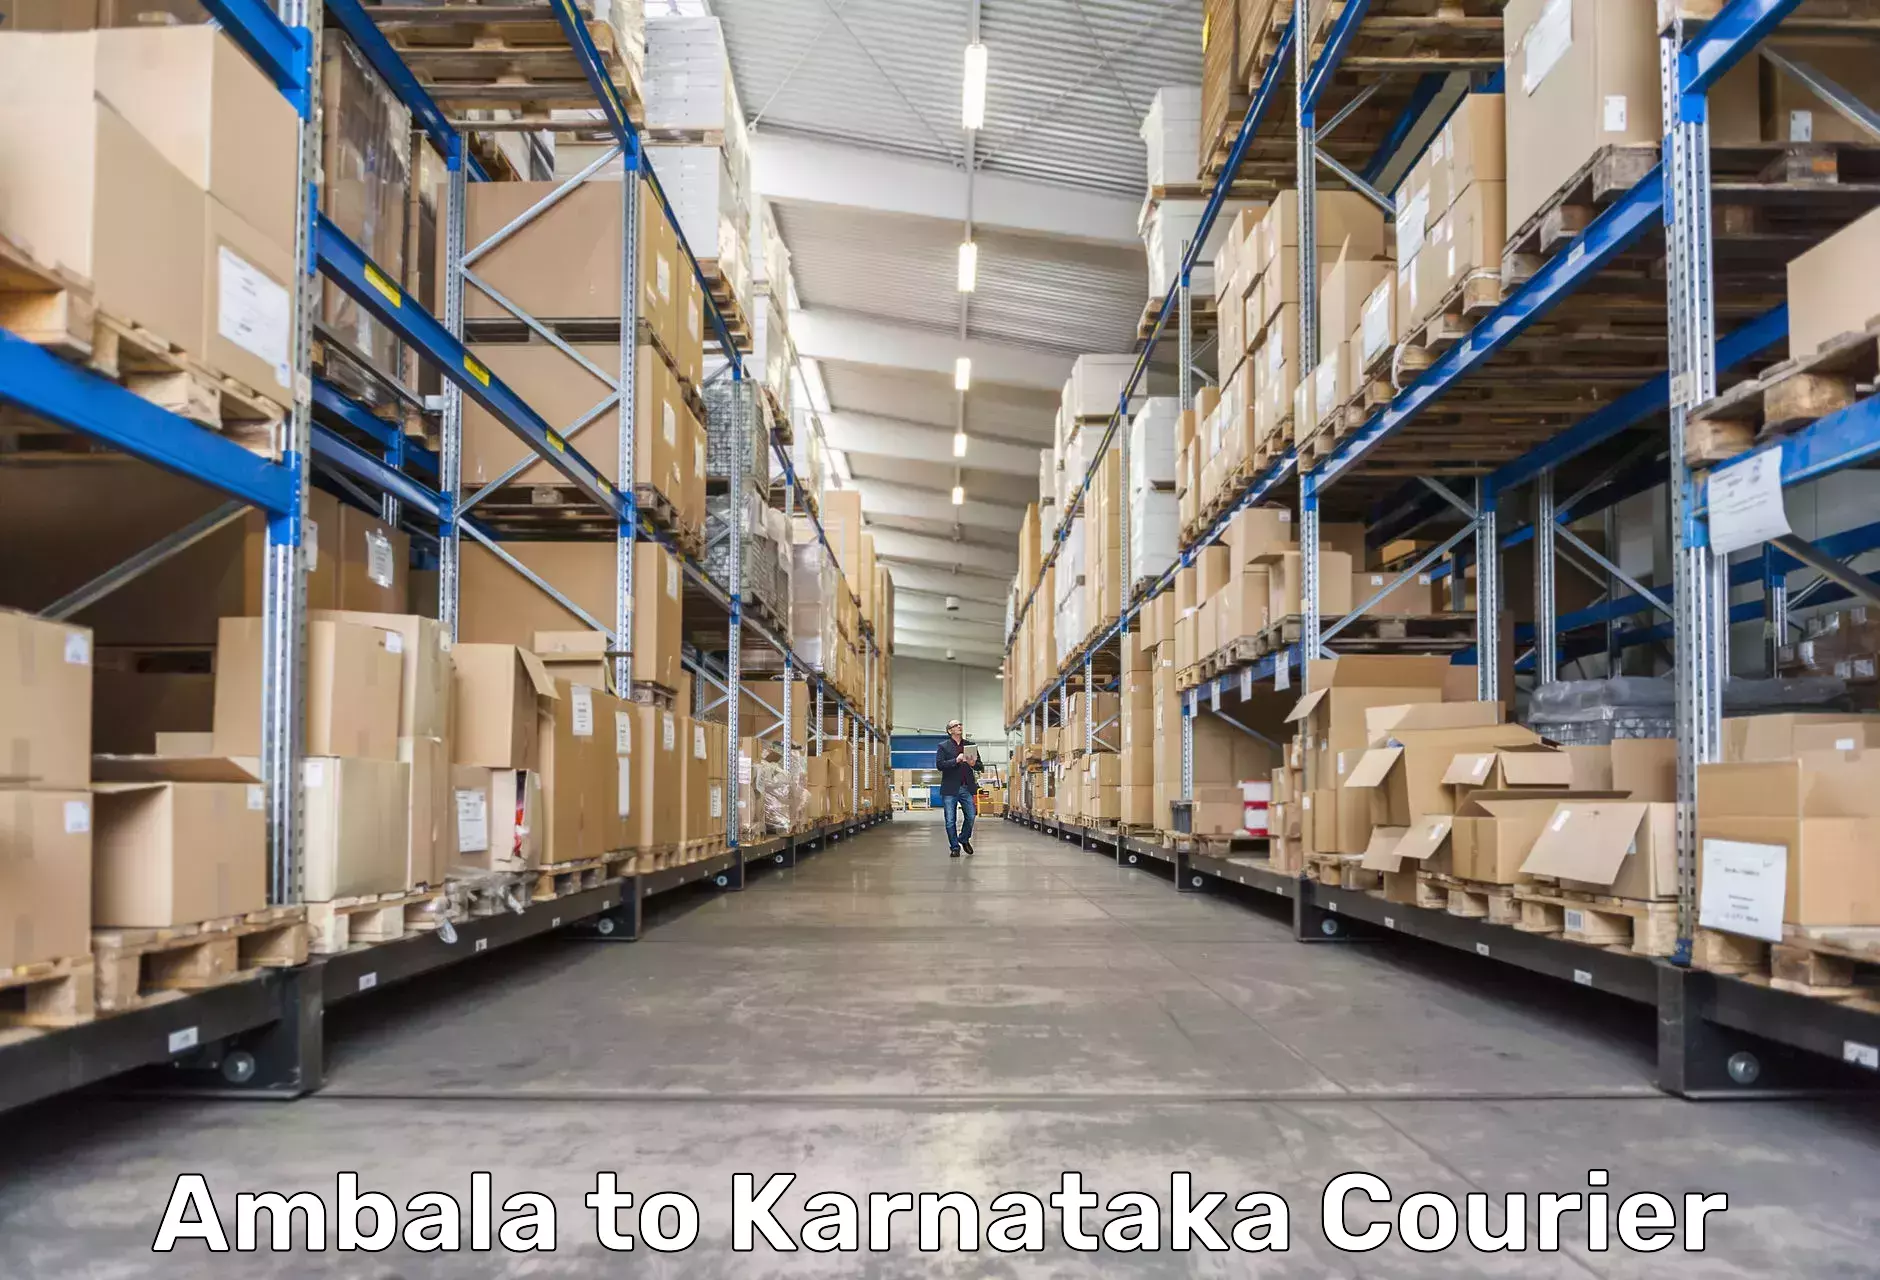 Express delivery capabilities Ambala to Karnataka